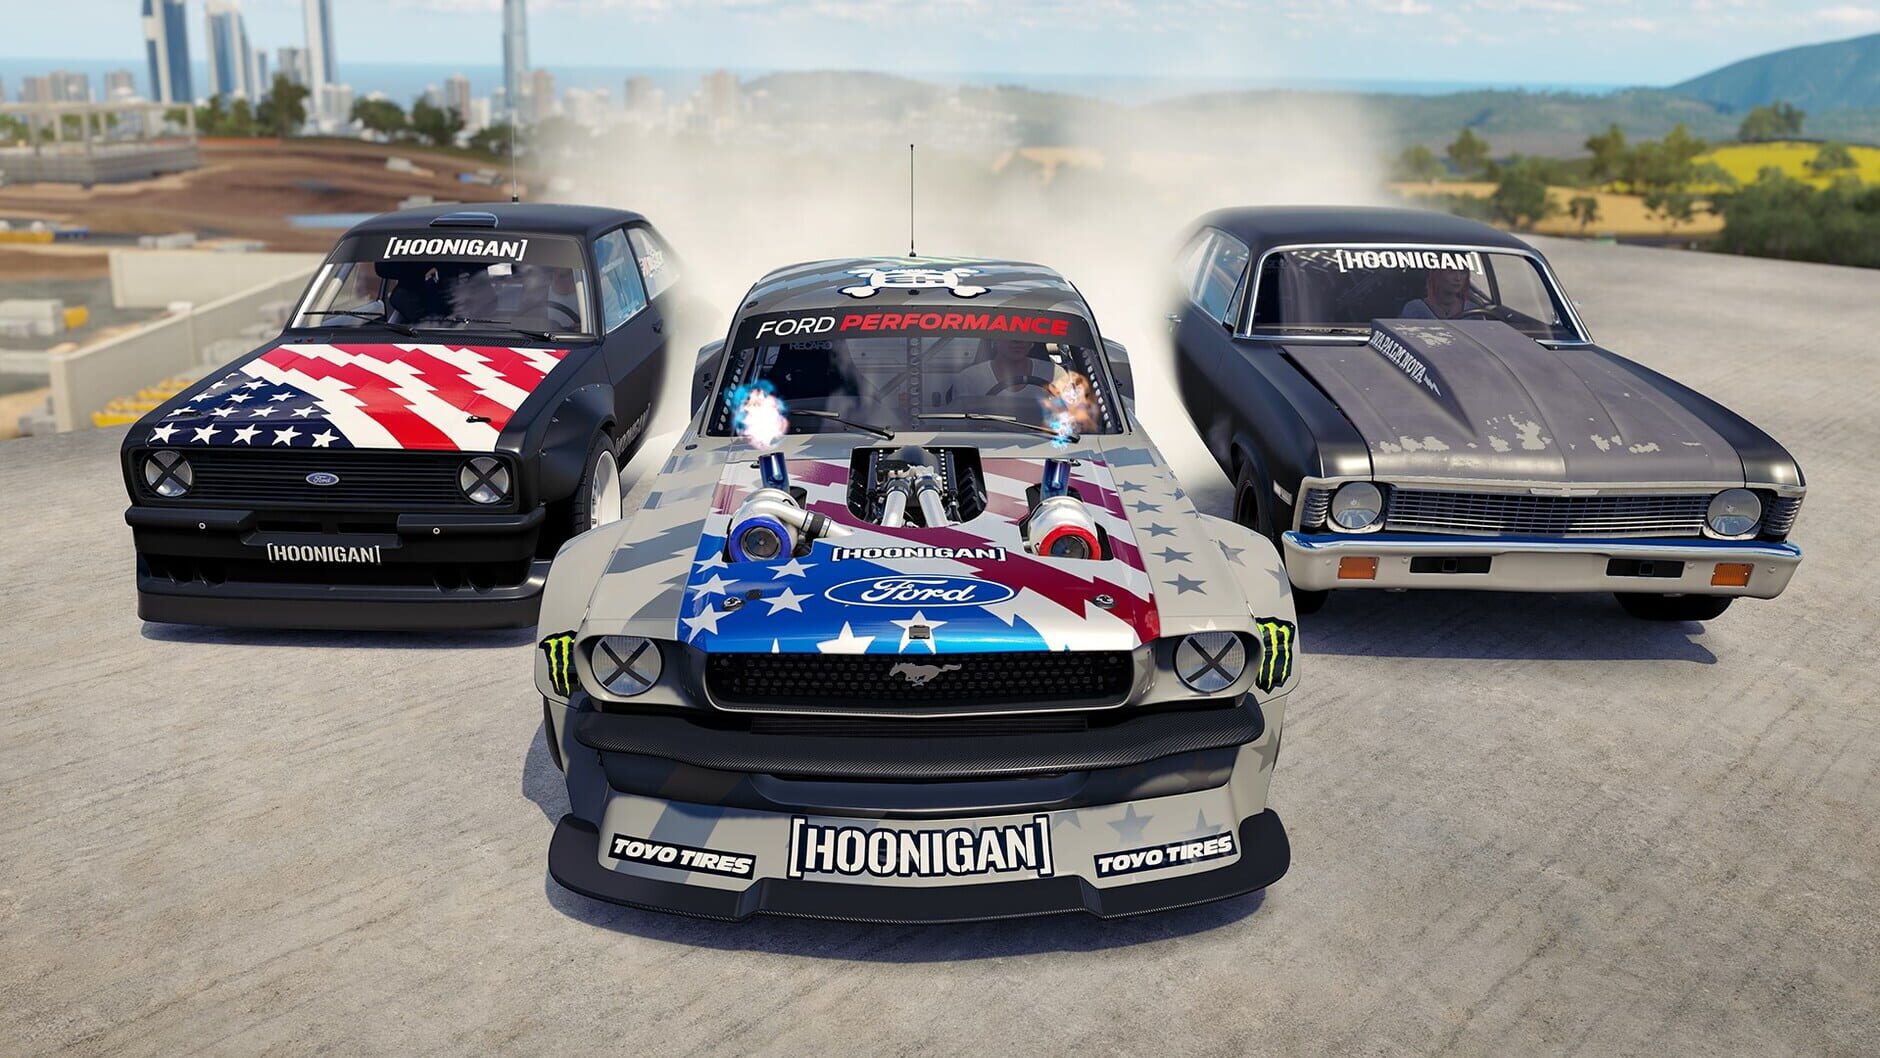 Screenshot for Forza Horizon 3: Hoonigan Car Pack